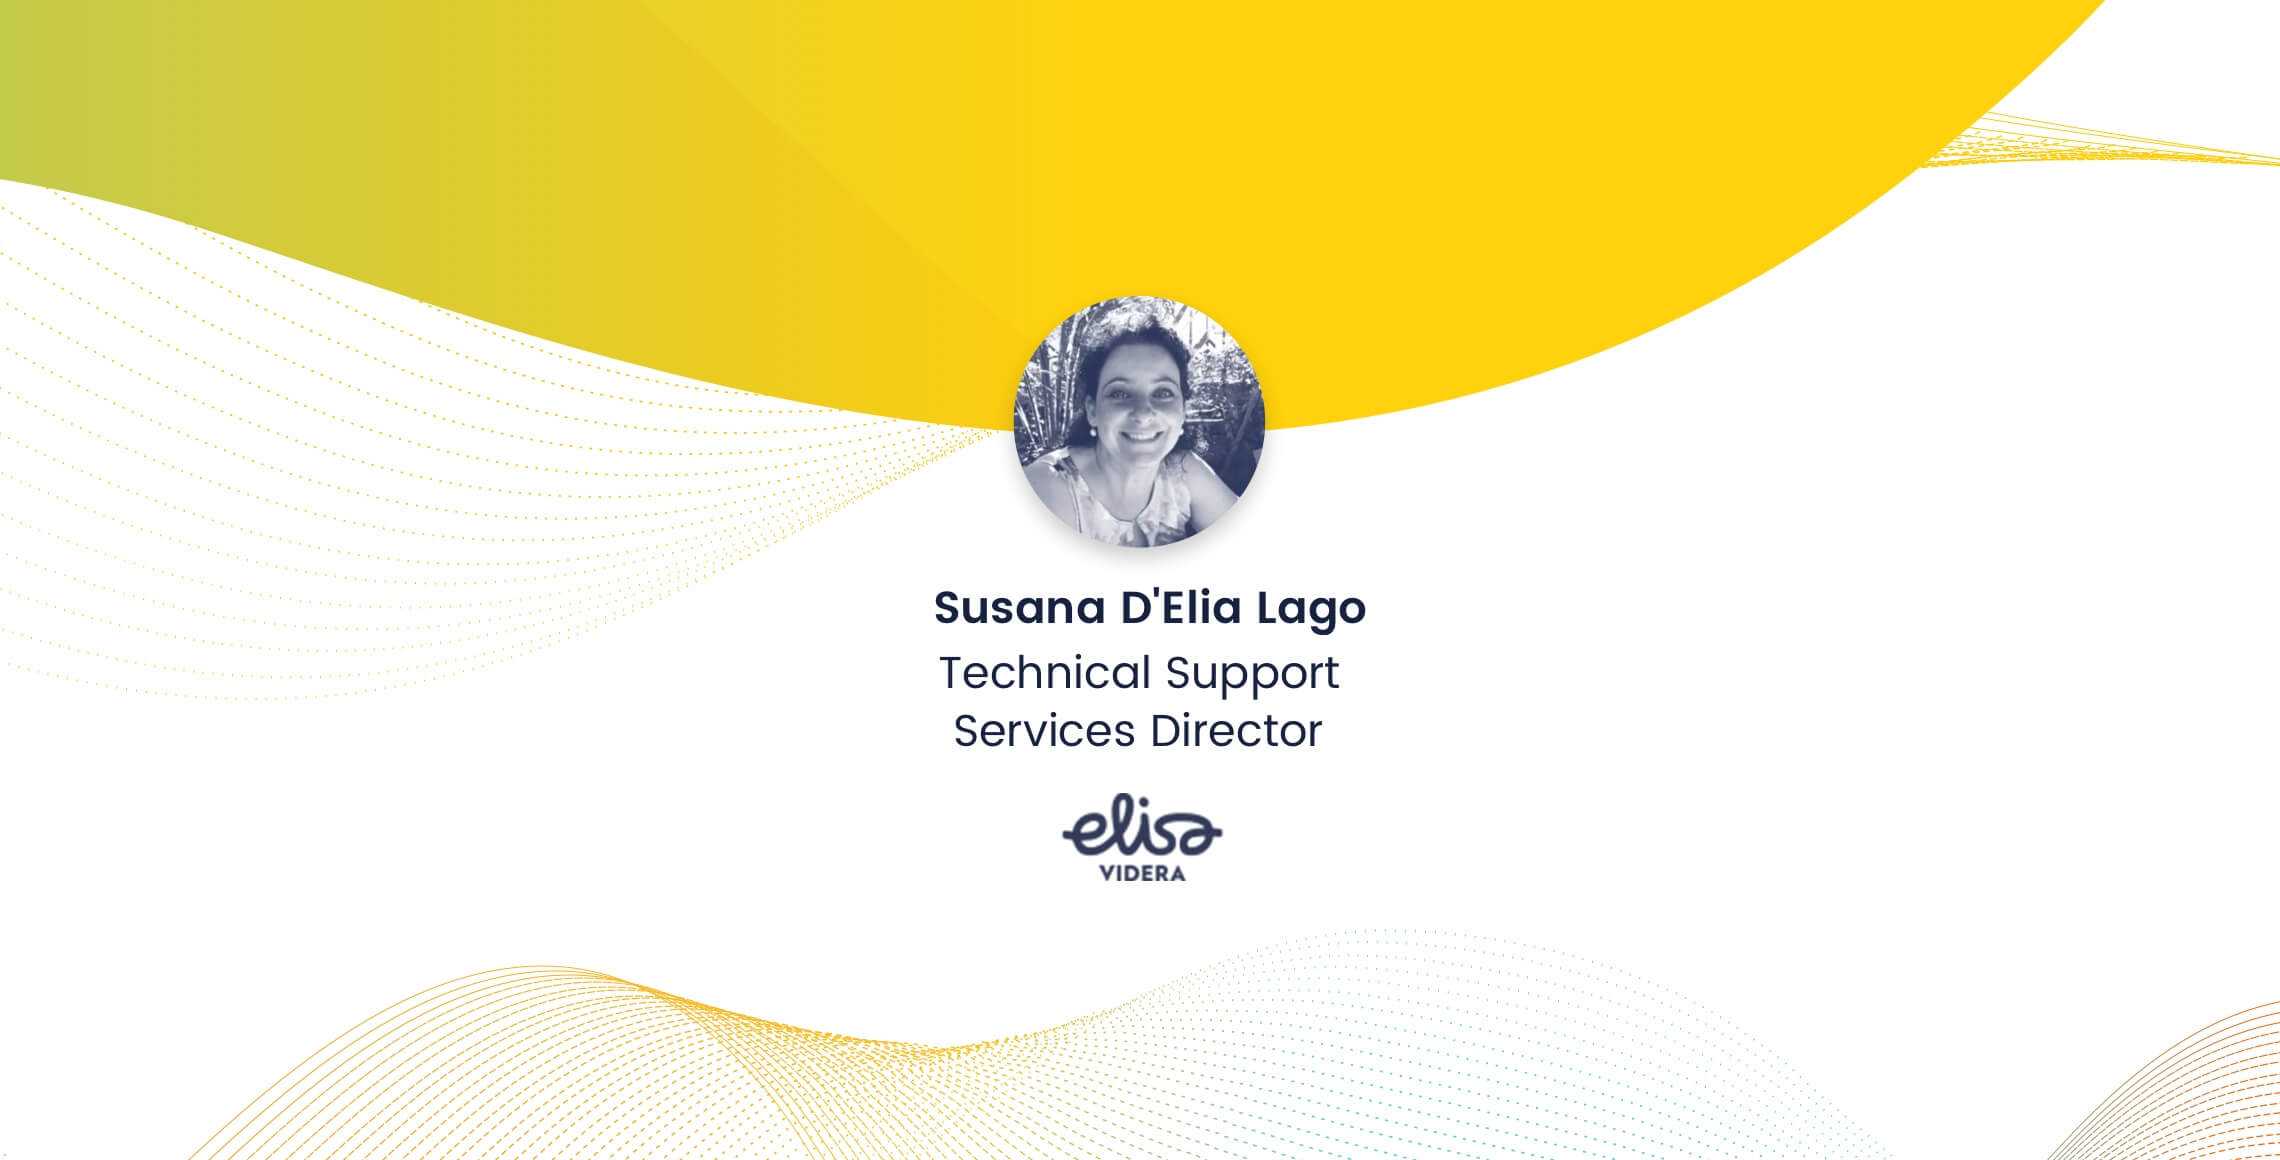 Susana D’Elia Lago, Technical Support Director, Elisa Videra